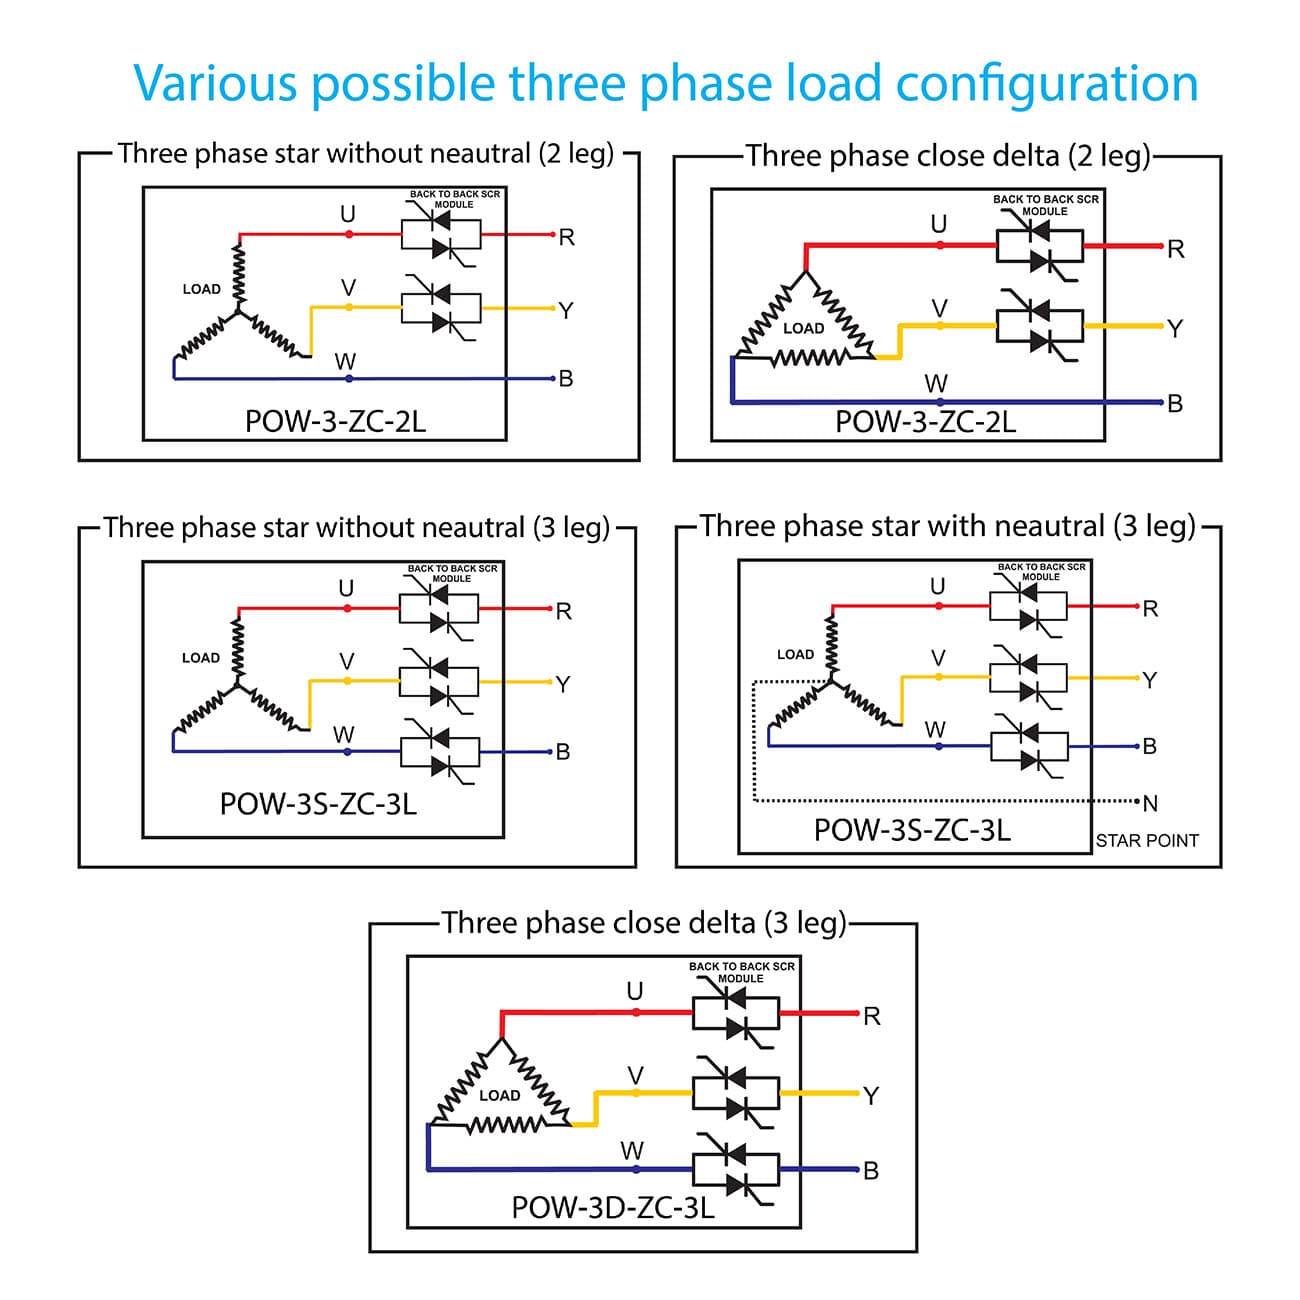 Three Phase Thyristor Power Switch – POW-3-ZC – Libratherm Instruments